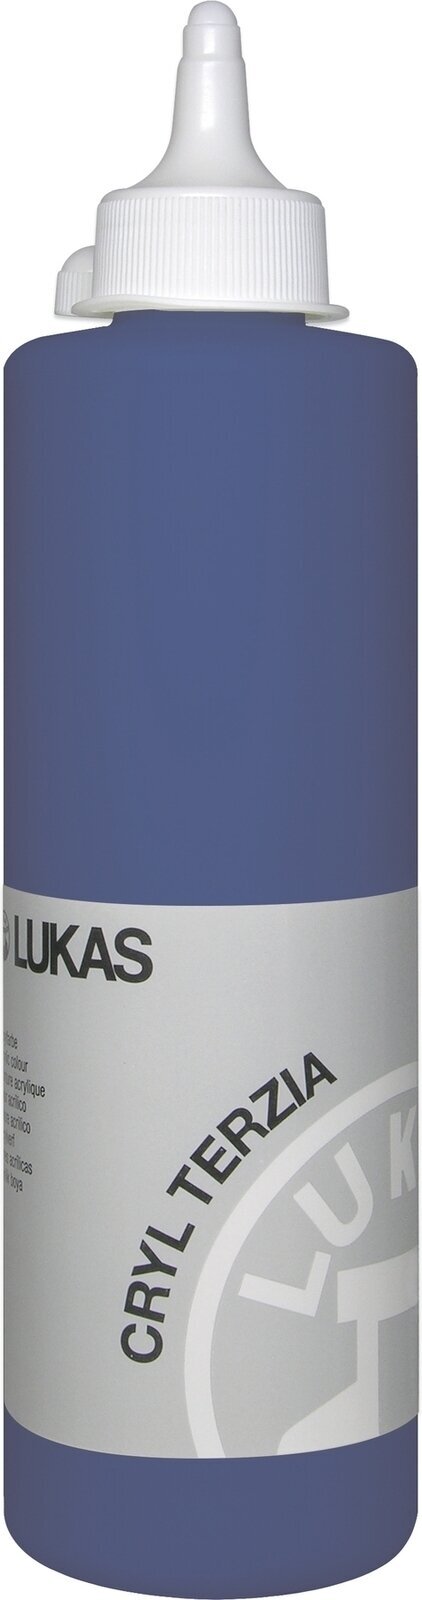 Peinture acrylique Lukas Cryl Terzia Peinture acrylique 500 ml Cobalt Blue Hue